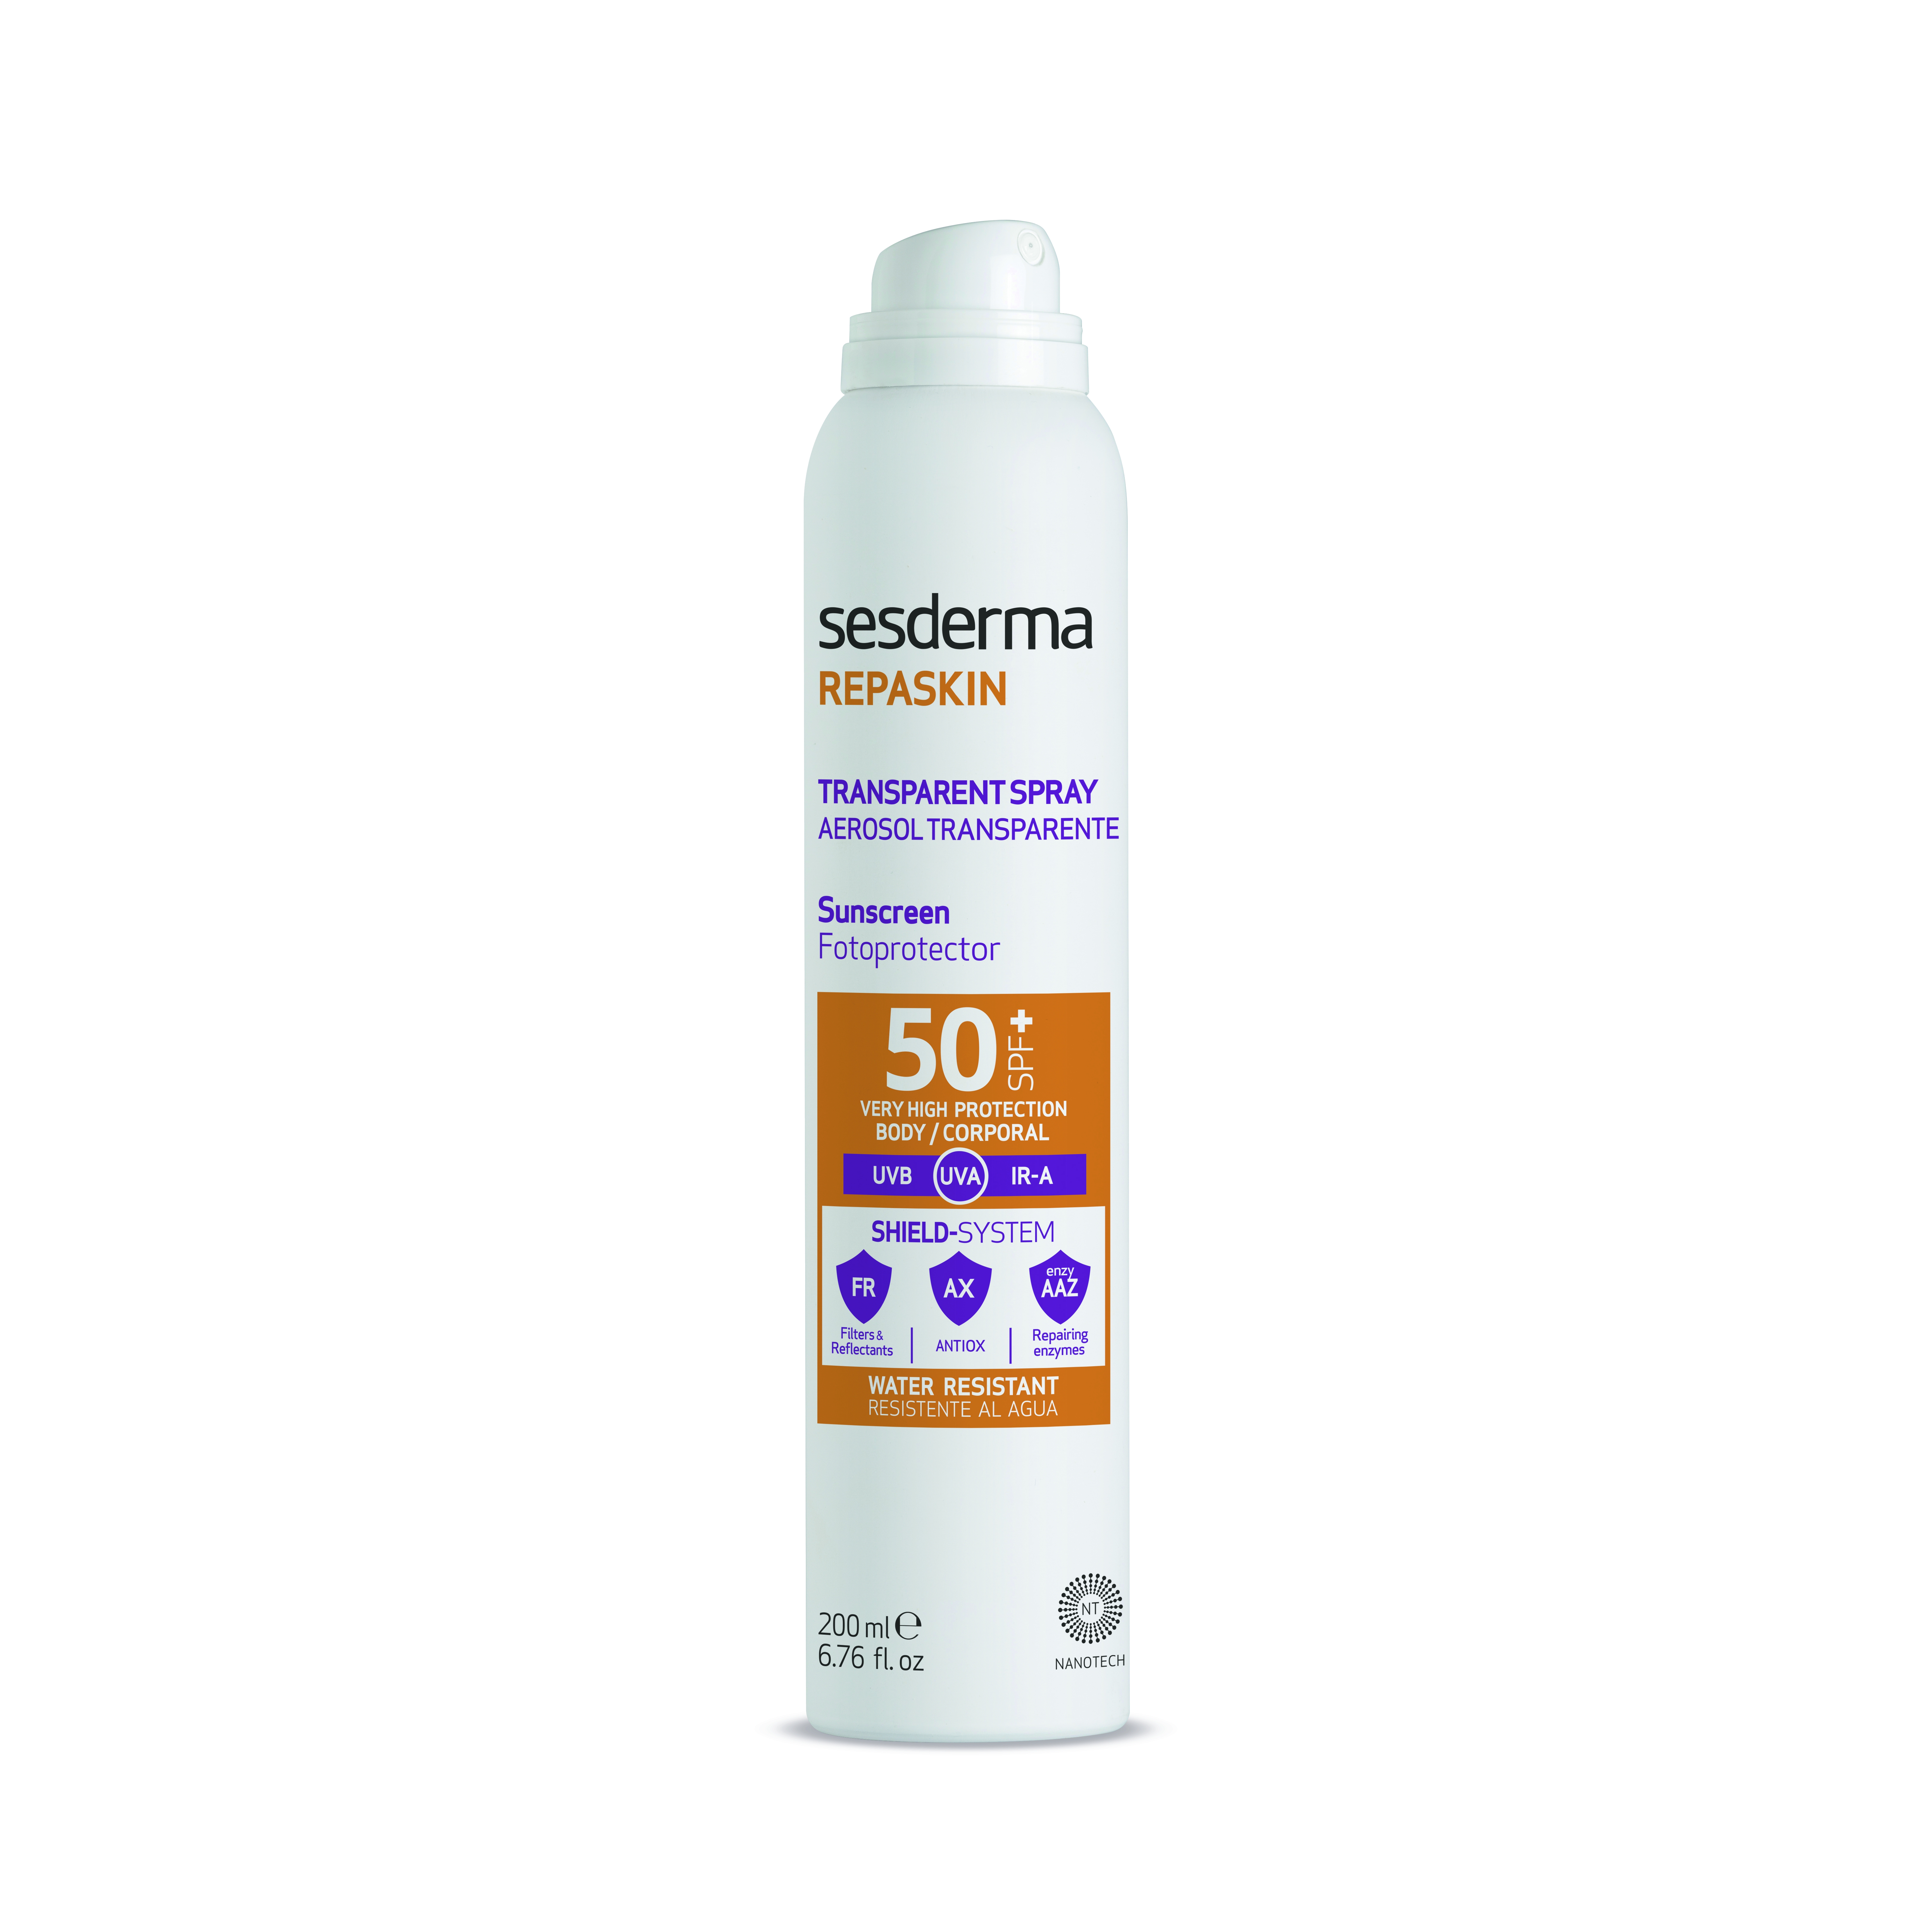 REPASKIN Transparent Spray Aerosol 50+SPF 200 ml